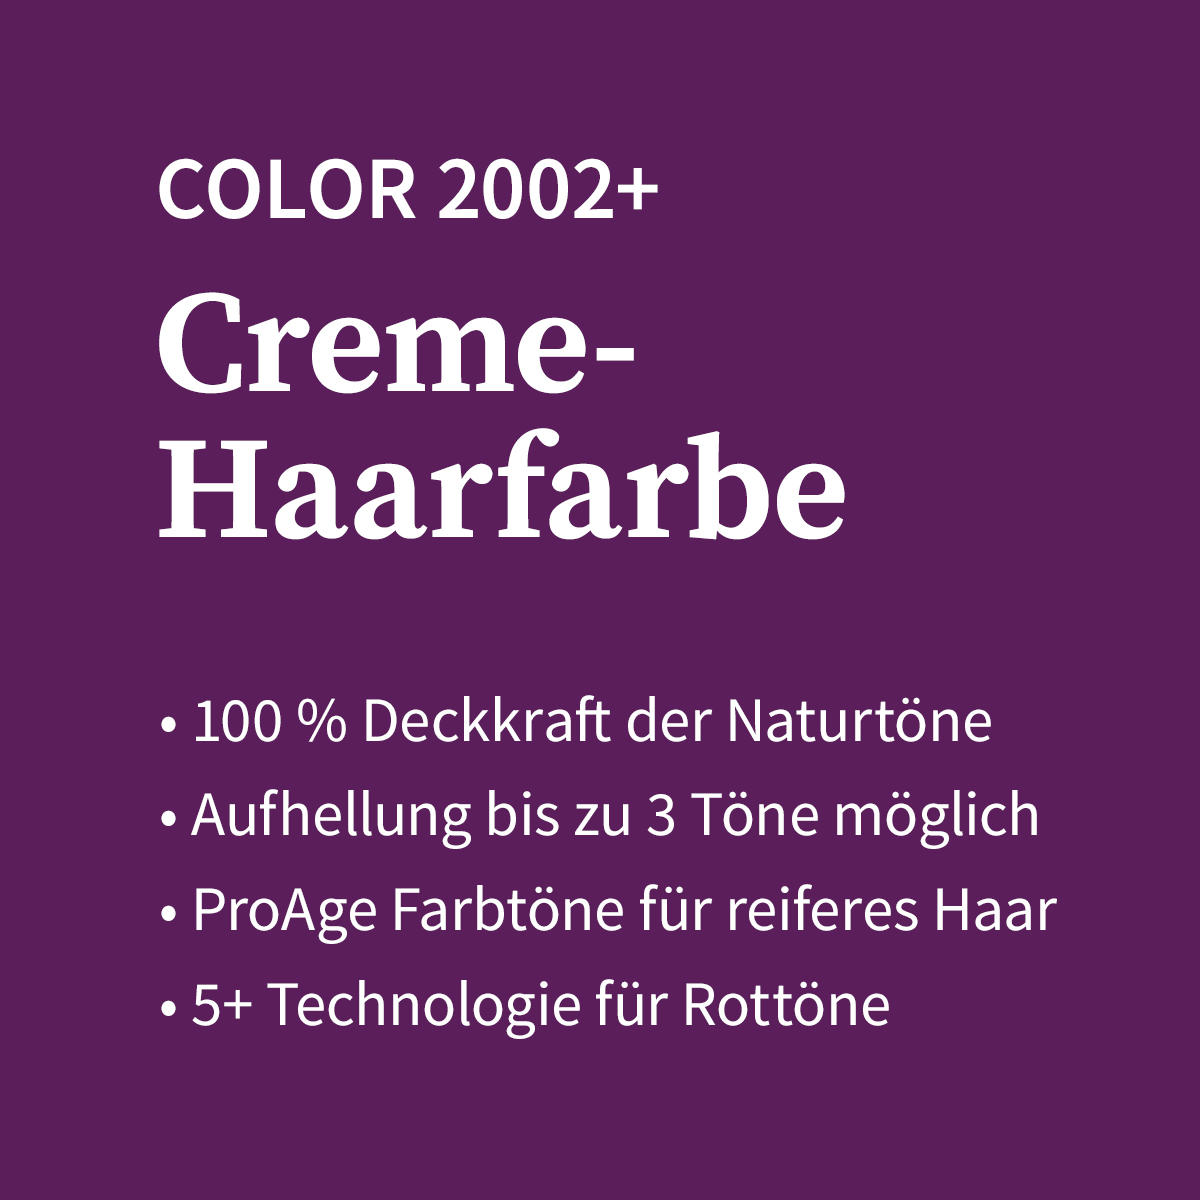 Basler Color 2002+ Cremehaarfarbe 5/55 hellbraun mahagoni intensiv, Tube 60 ml - 4